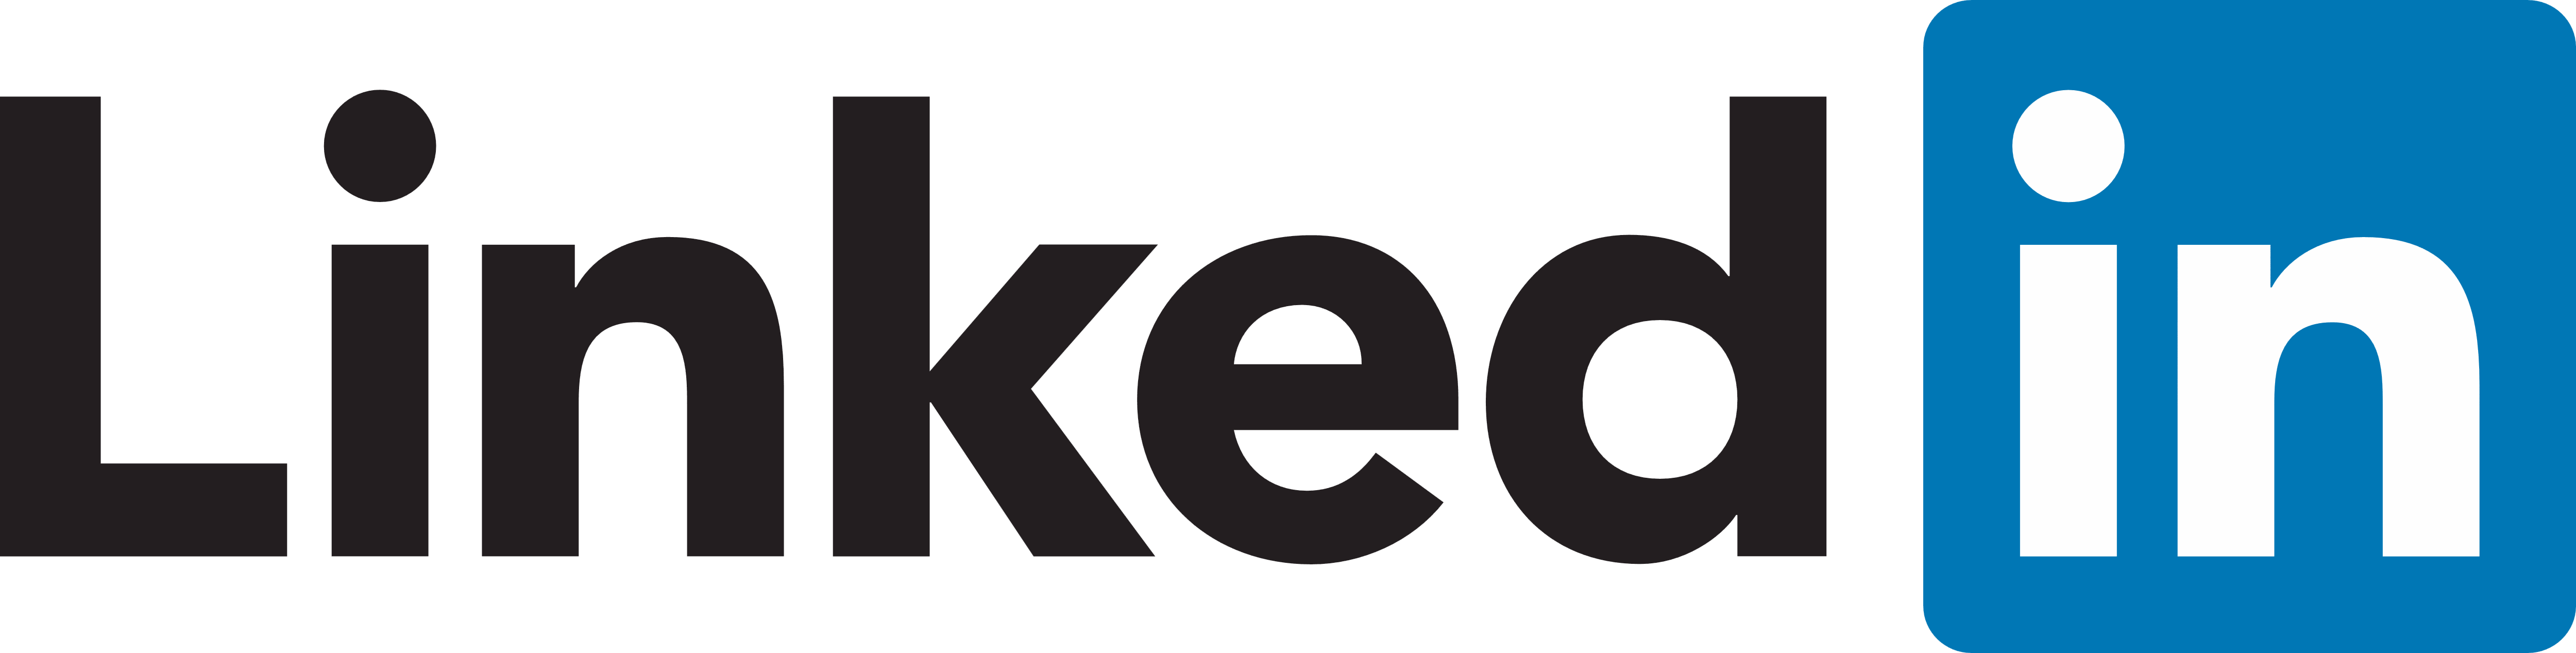 Odoo LinkedIn logo